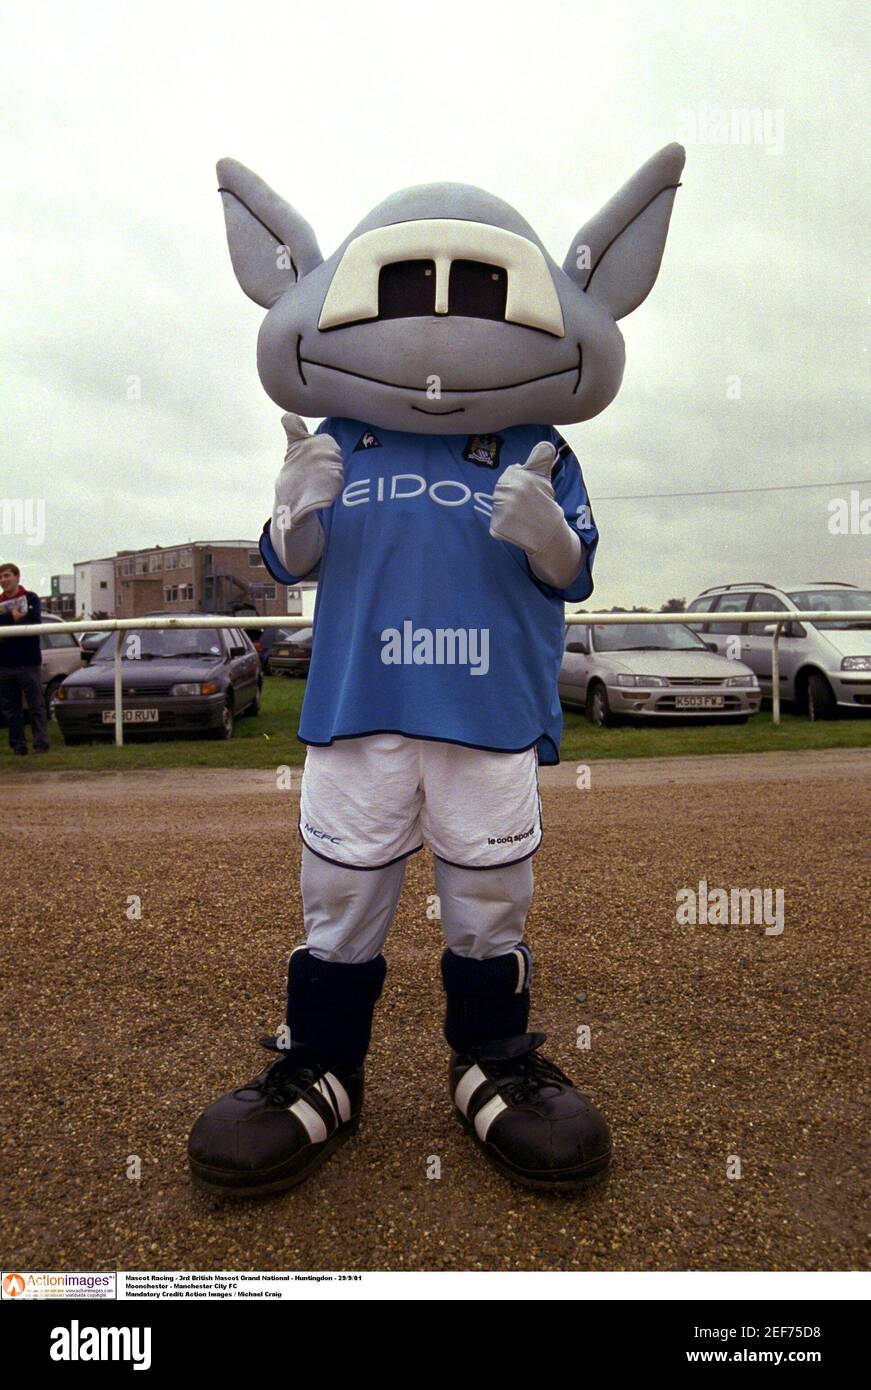 Mascot Racing - 3ª mascota británica Grand National - Huntingdon - 29/9/01  Moonchester - Manchester City FC crédito obligatorio: Action Images /  Michael Craig Fotografía de stock - Alamy